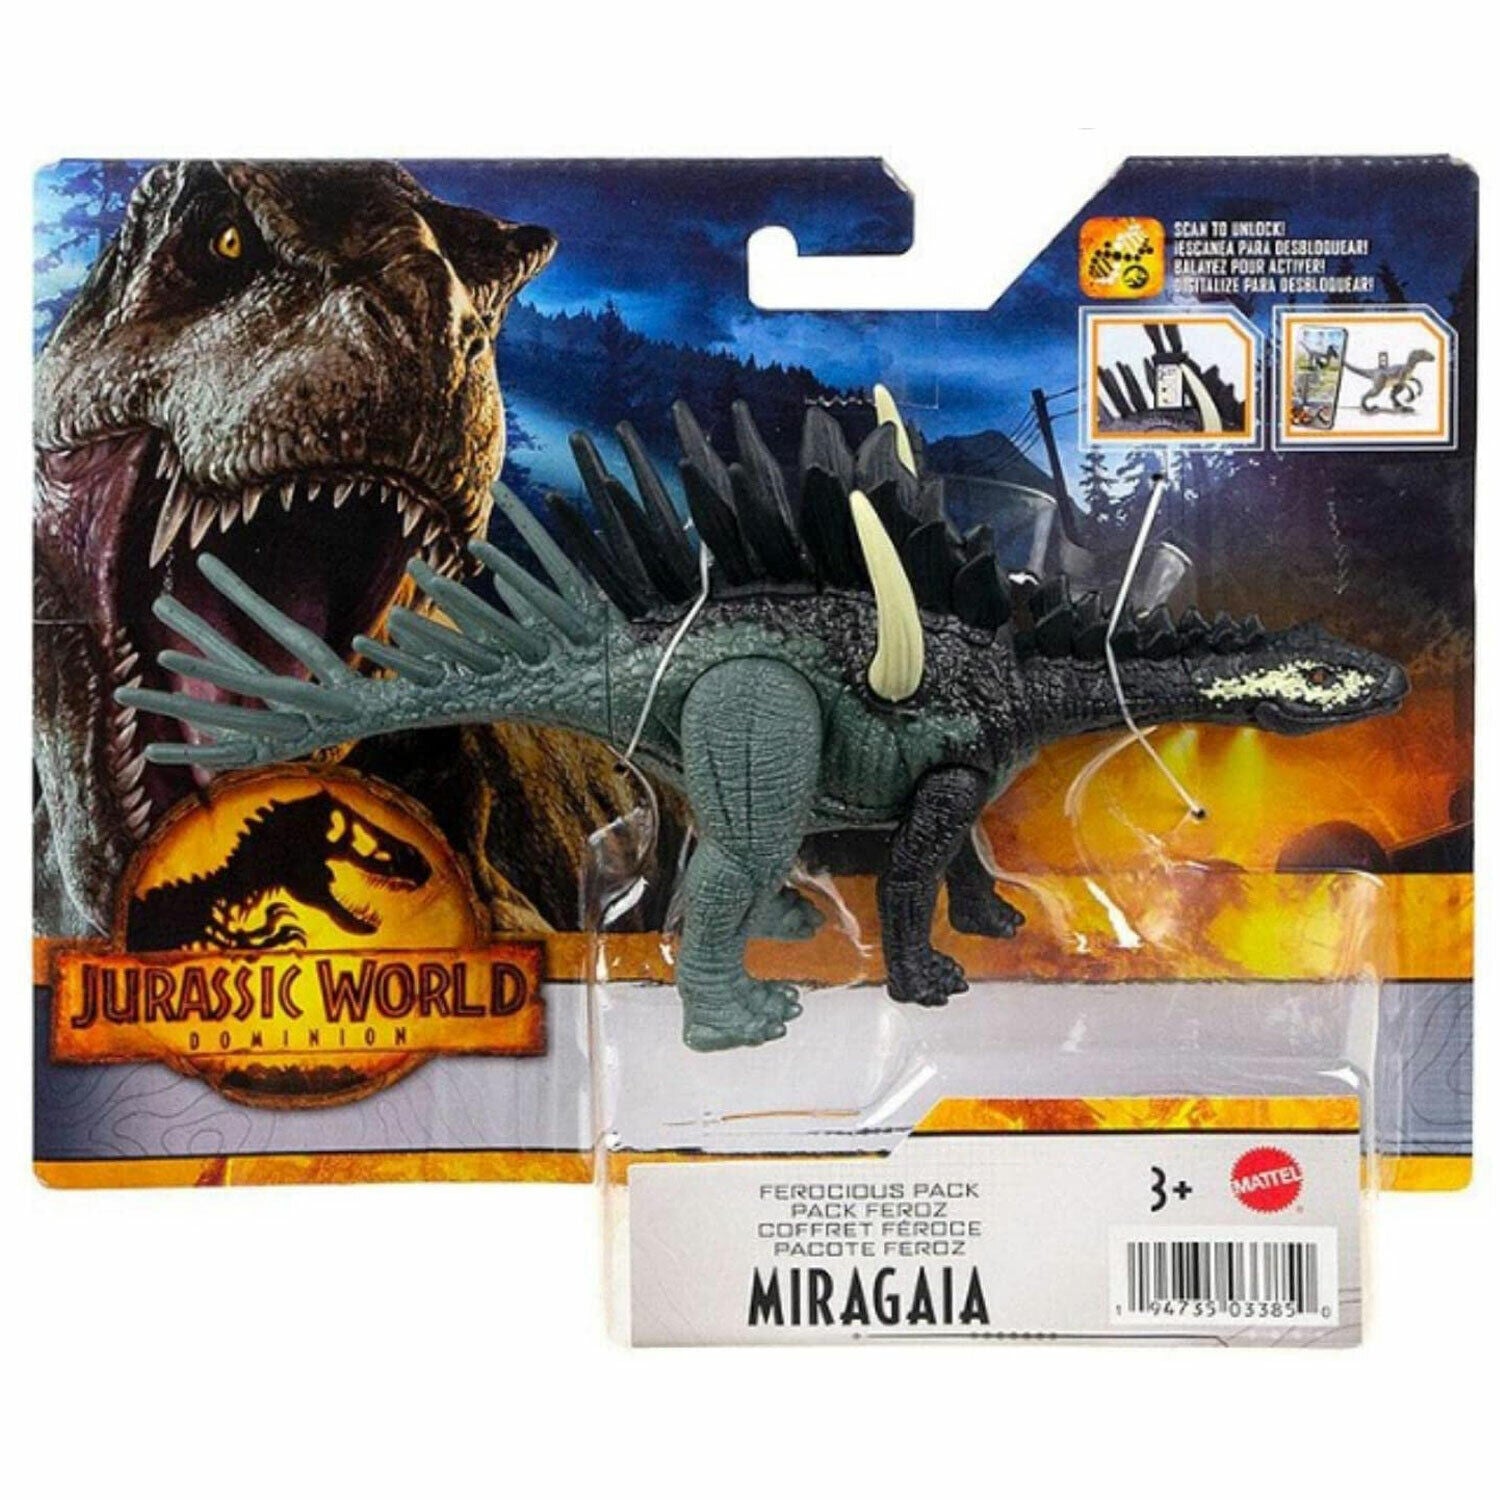 Jurassic World Dominion Ferocious Pack Miragaia Action Figure - New in Box